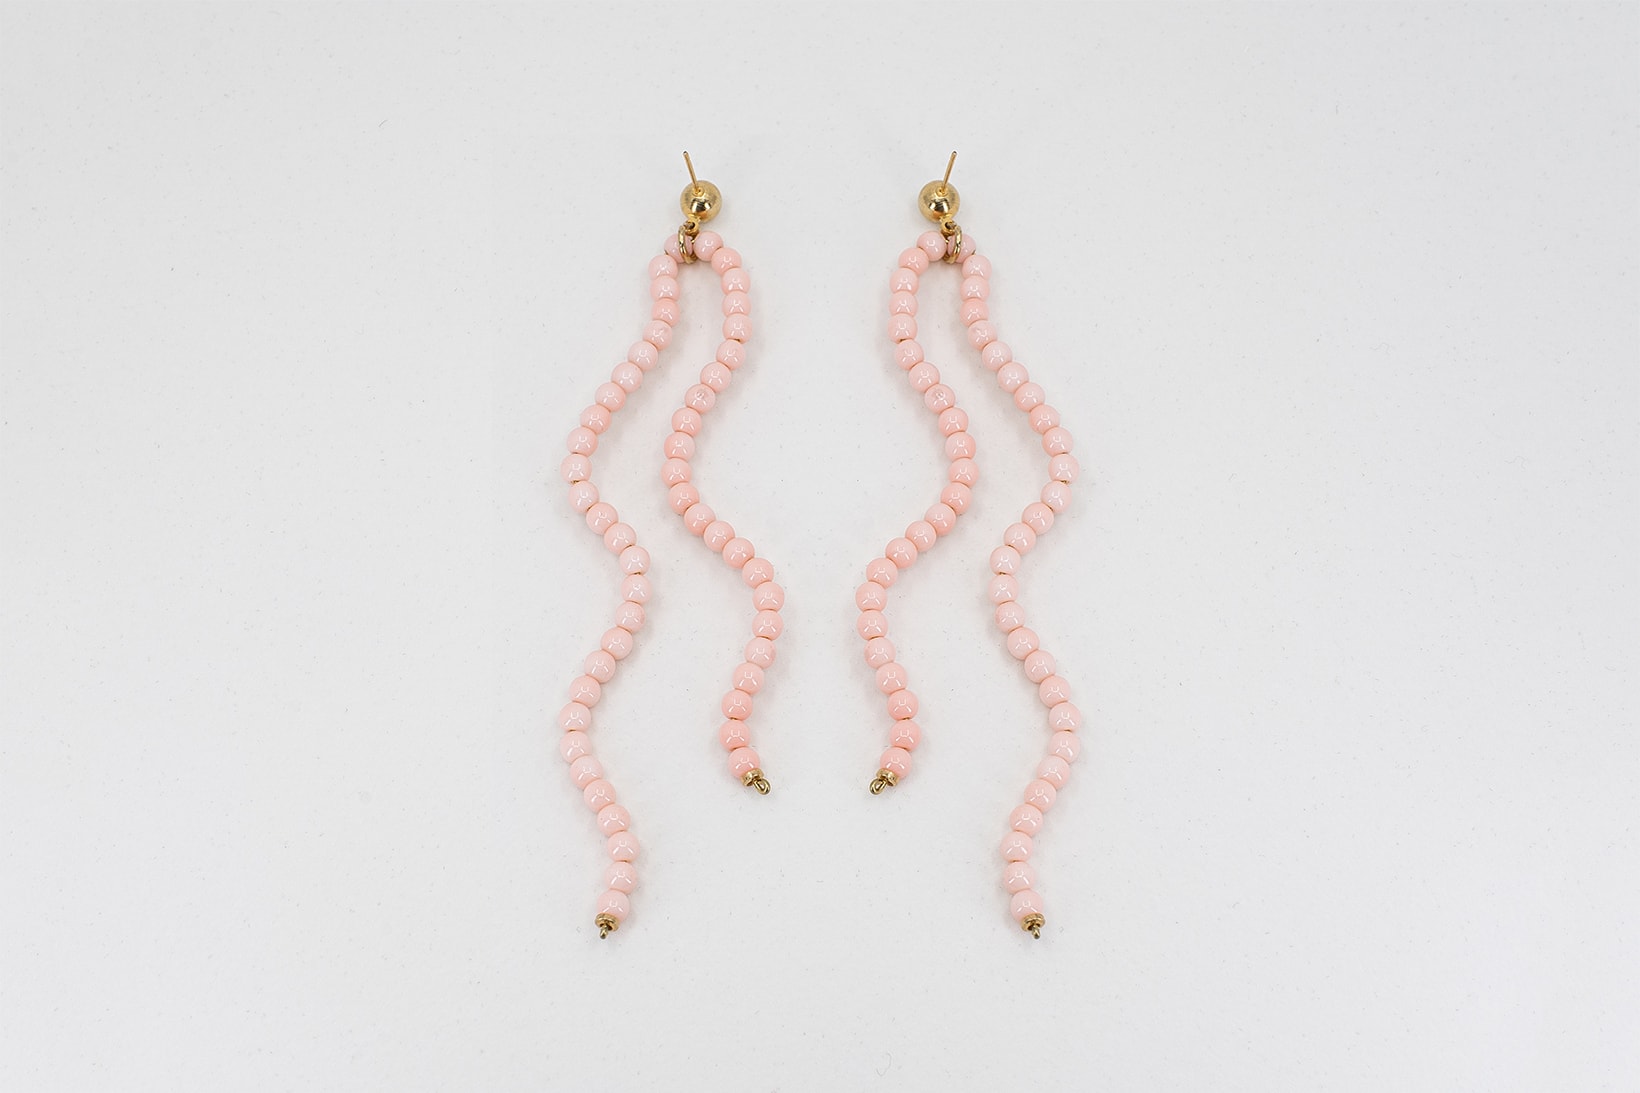 scho studio minju kim spring summer 2021 collection jewelry necklaces earrings custom seoul south korea